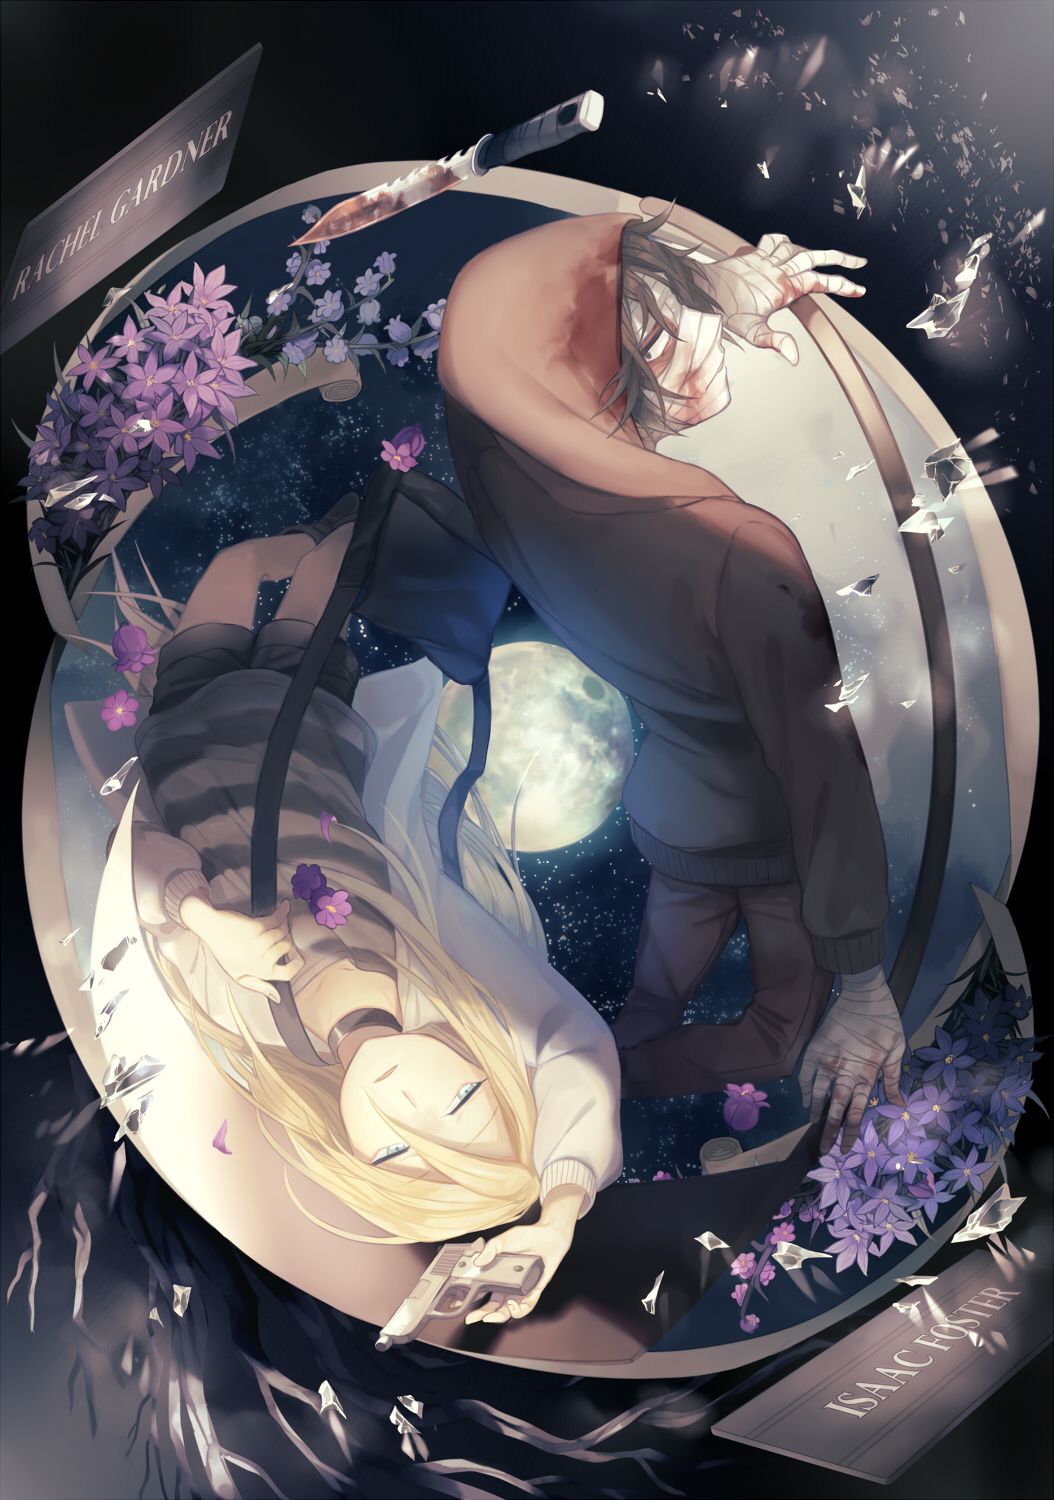 Satsuriku no Tenshi (Angels Of Death) Anime Image Board